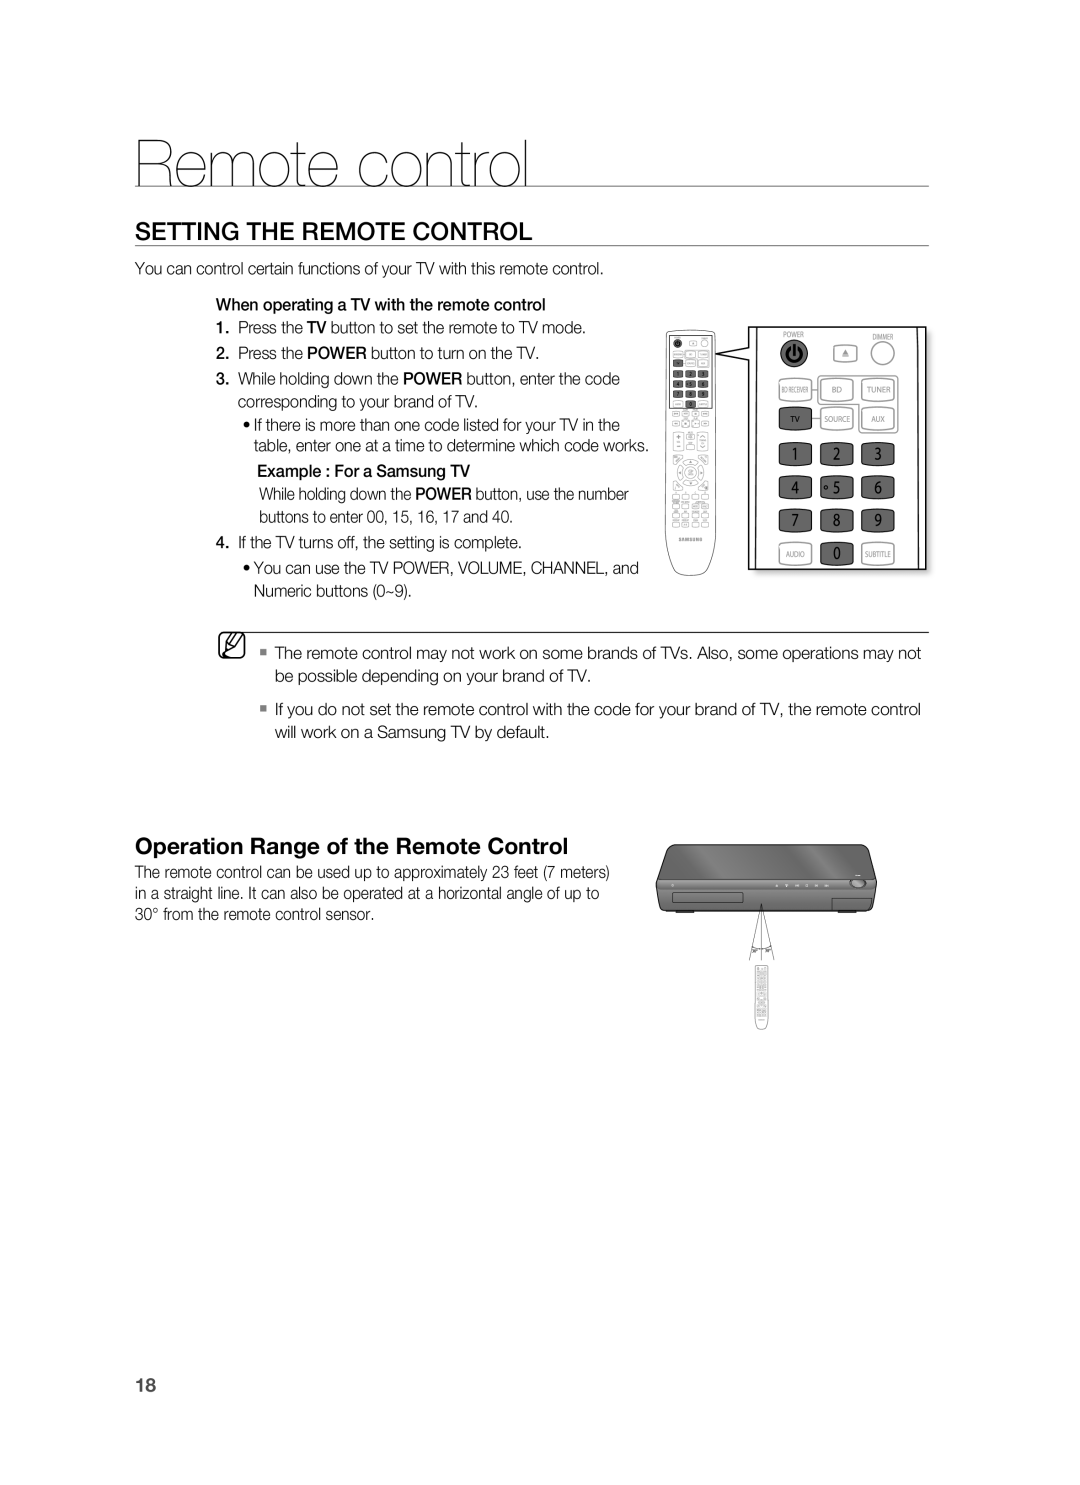 Samsung AH68-02231A, HT-BD3252A Setting The Remote Control, Remote control, Operation Range of the Remote Control, M  